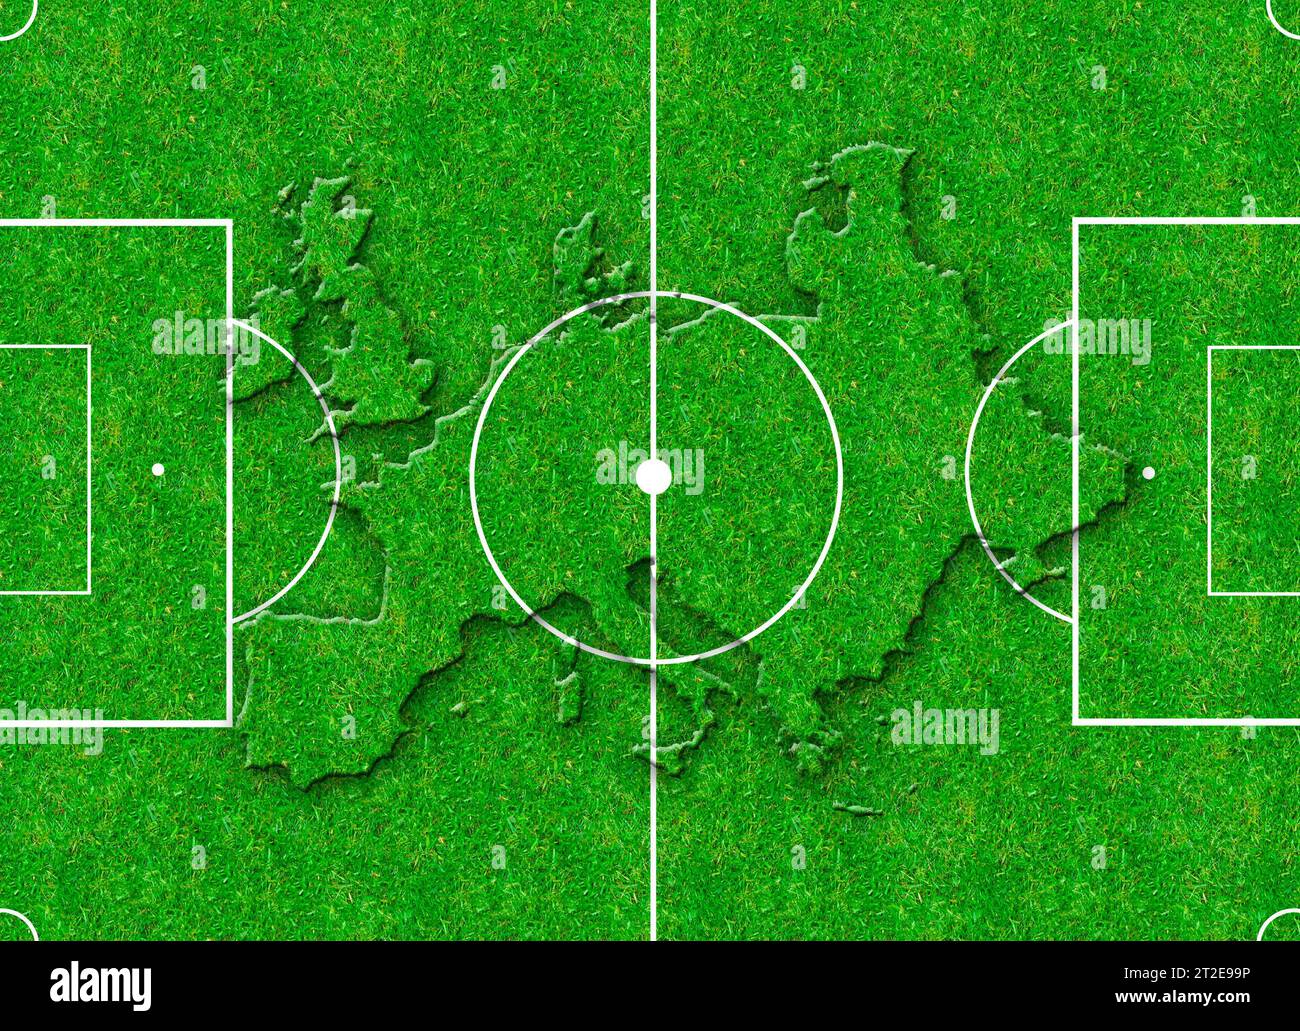 Campo de fútbol y mapa de Europa, temporada europea de fútbol Foto de stock